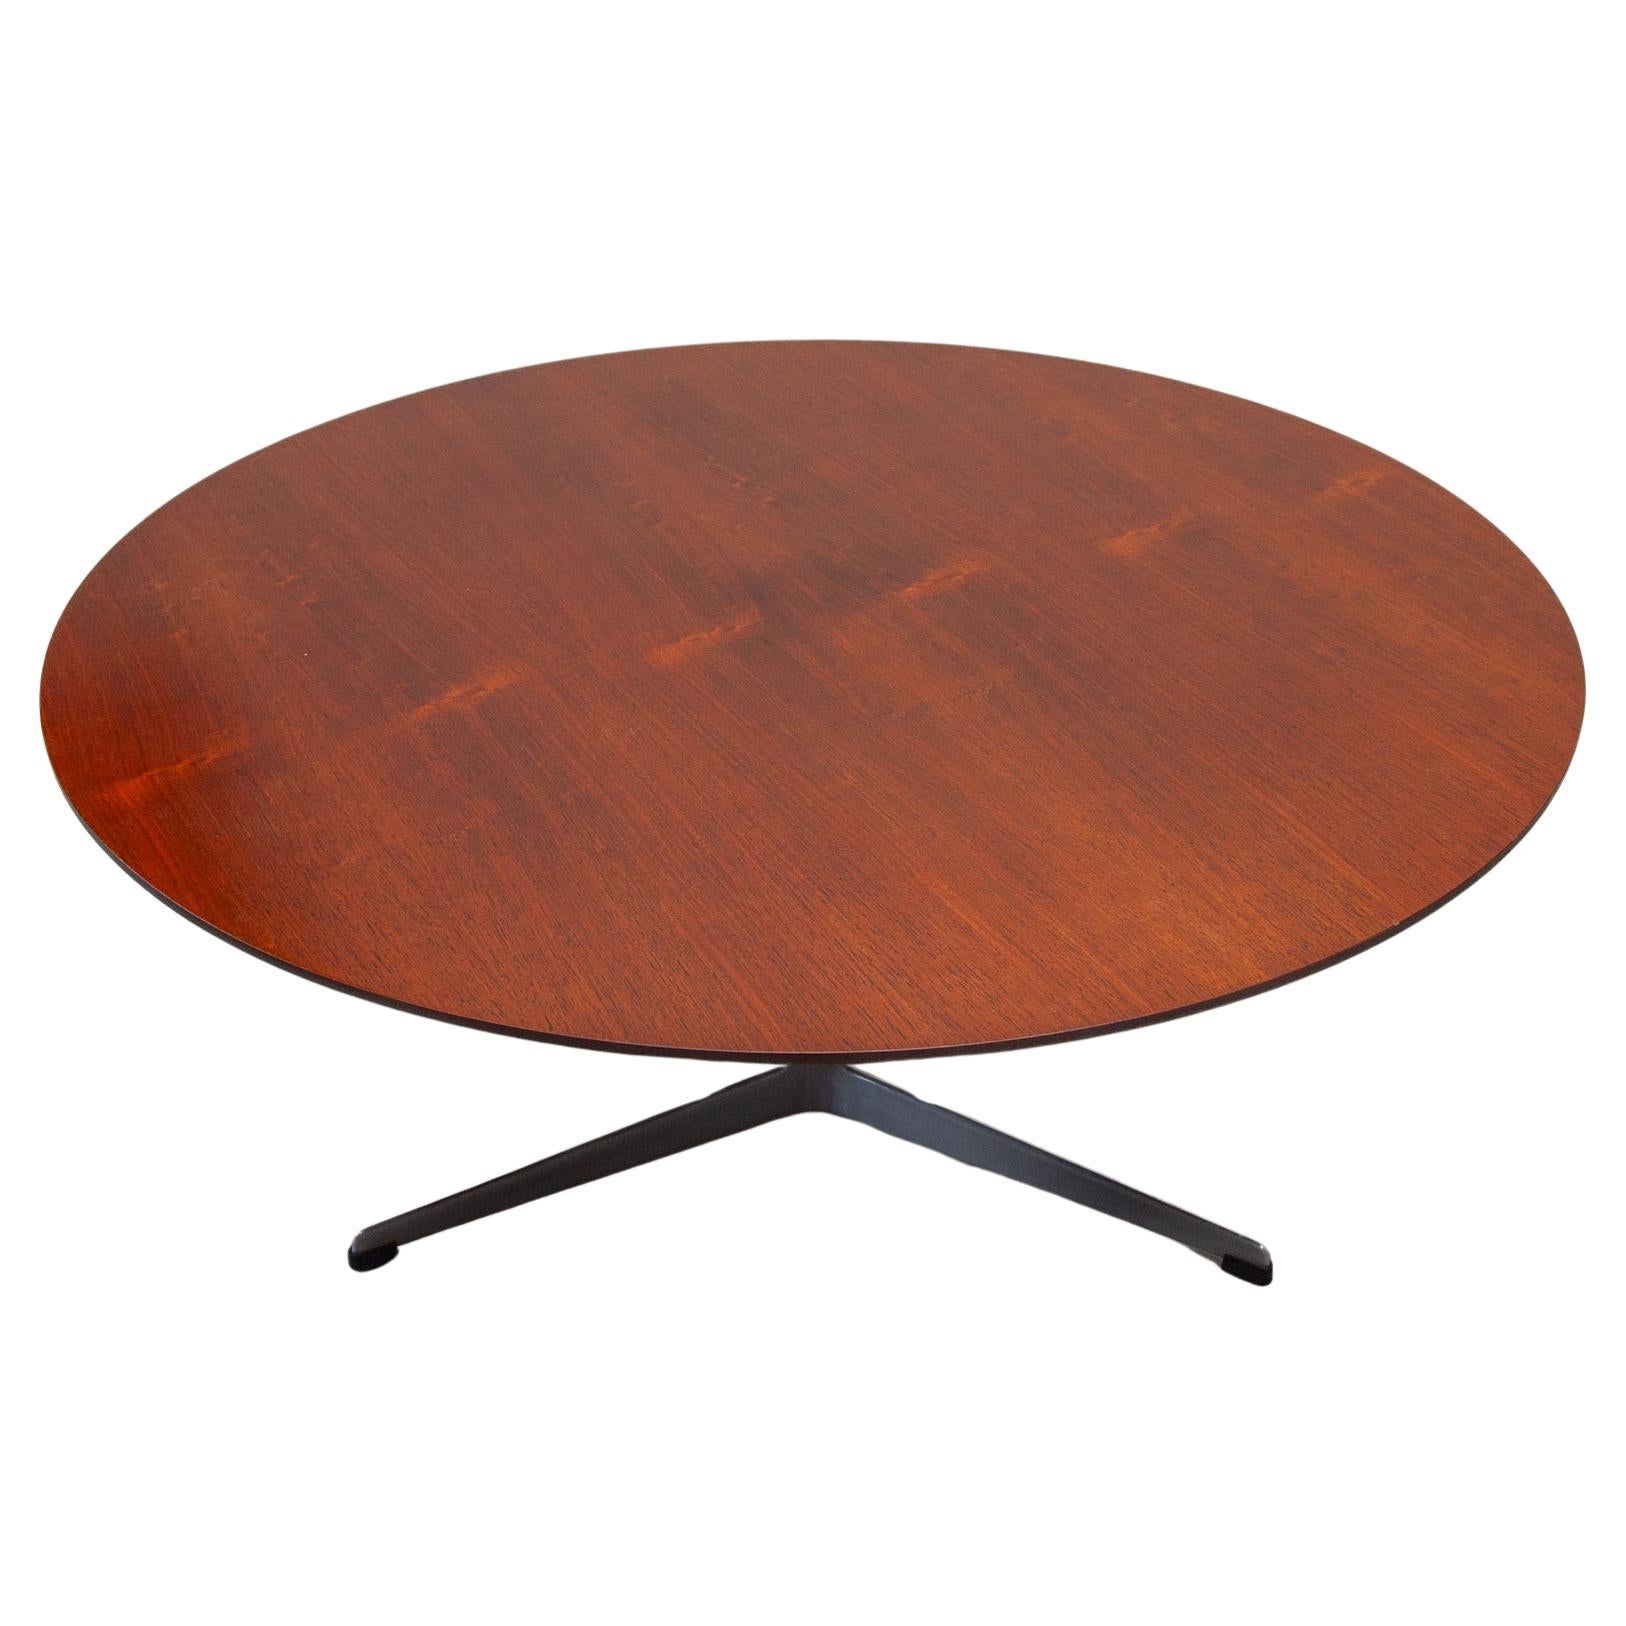 Fritz Hansen Round Coffee Table designed by Arne Jacobsen